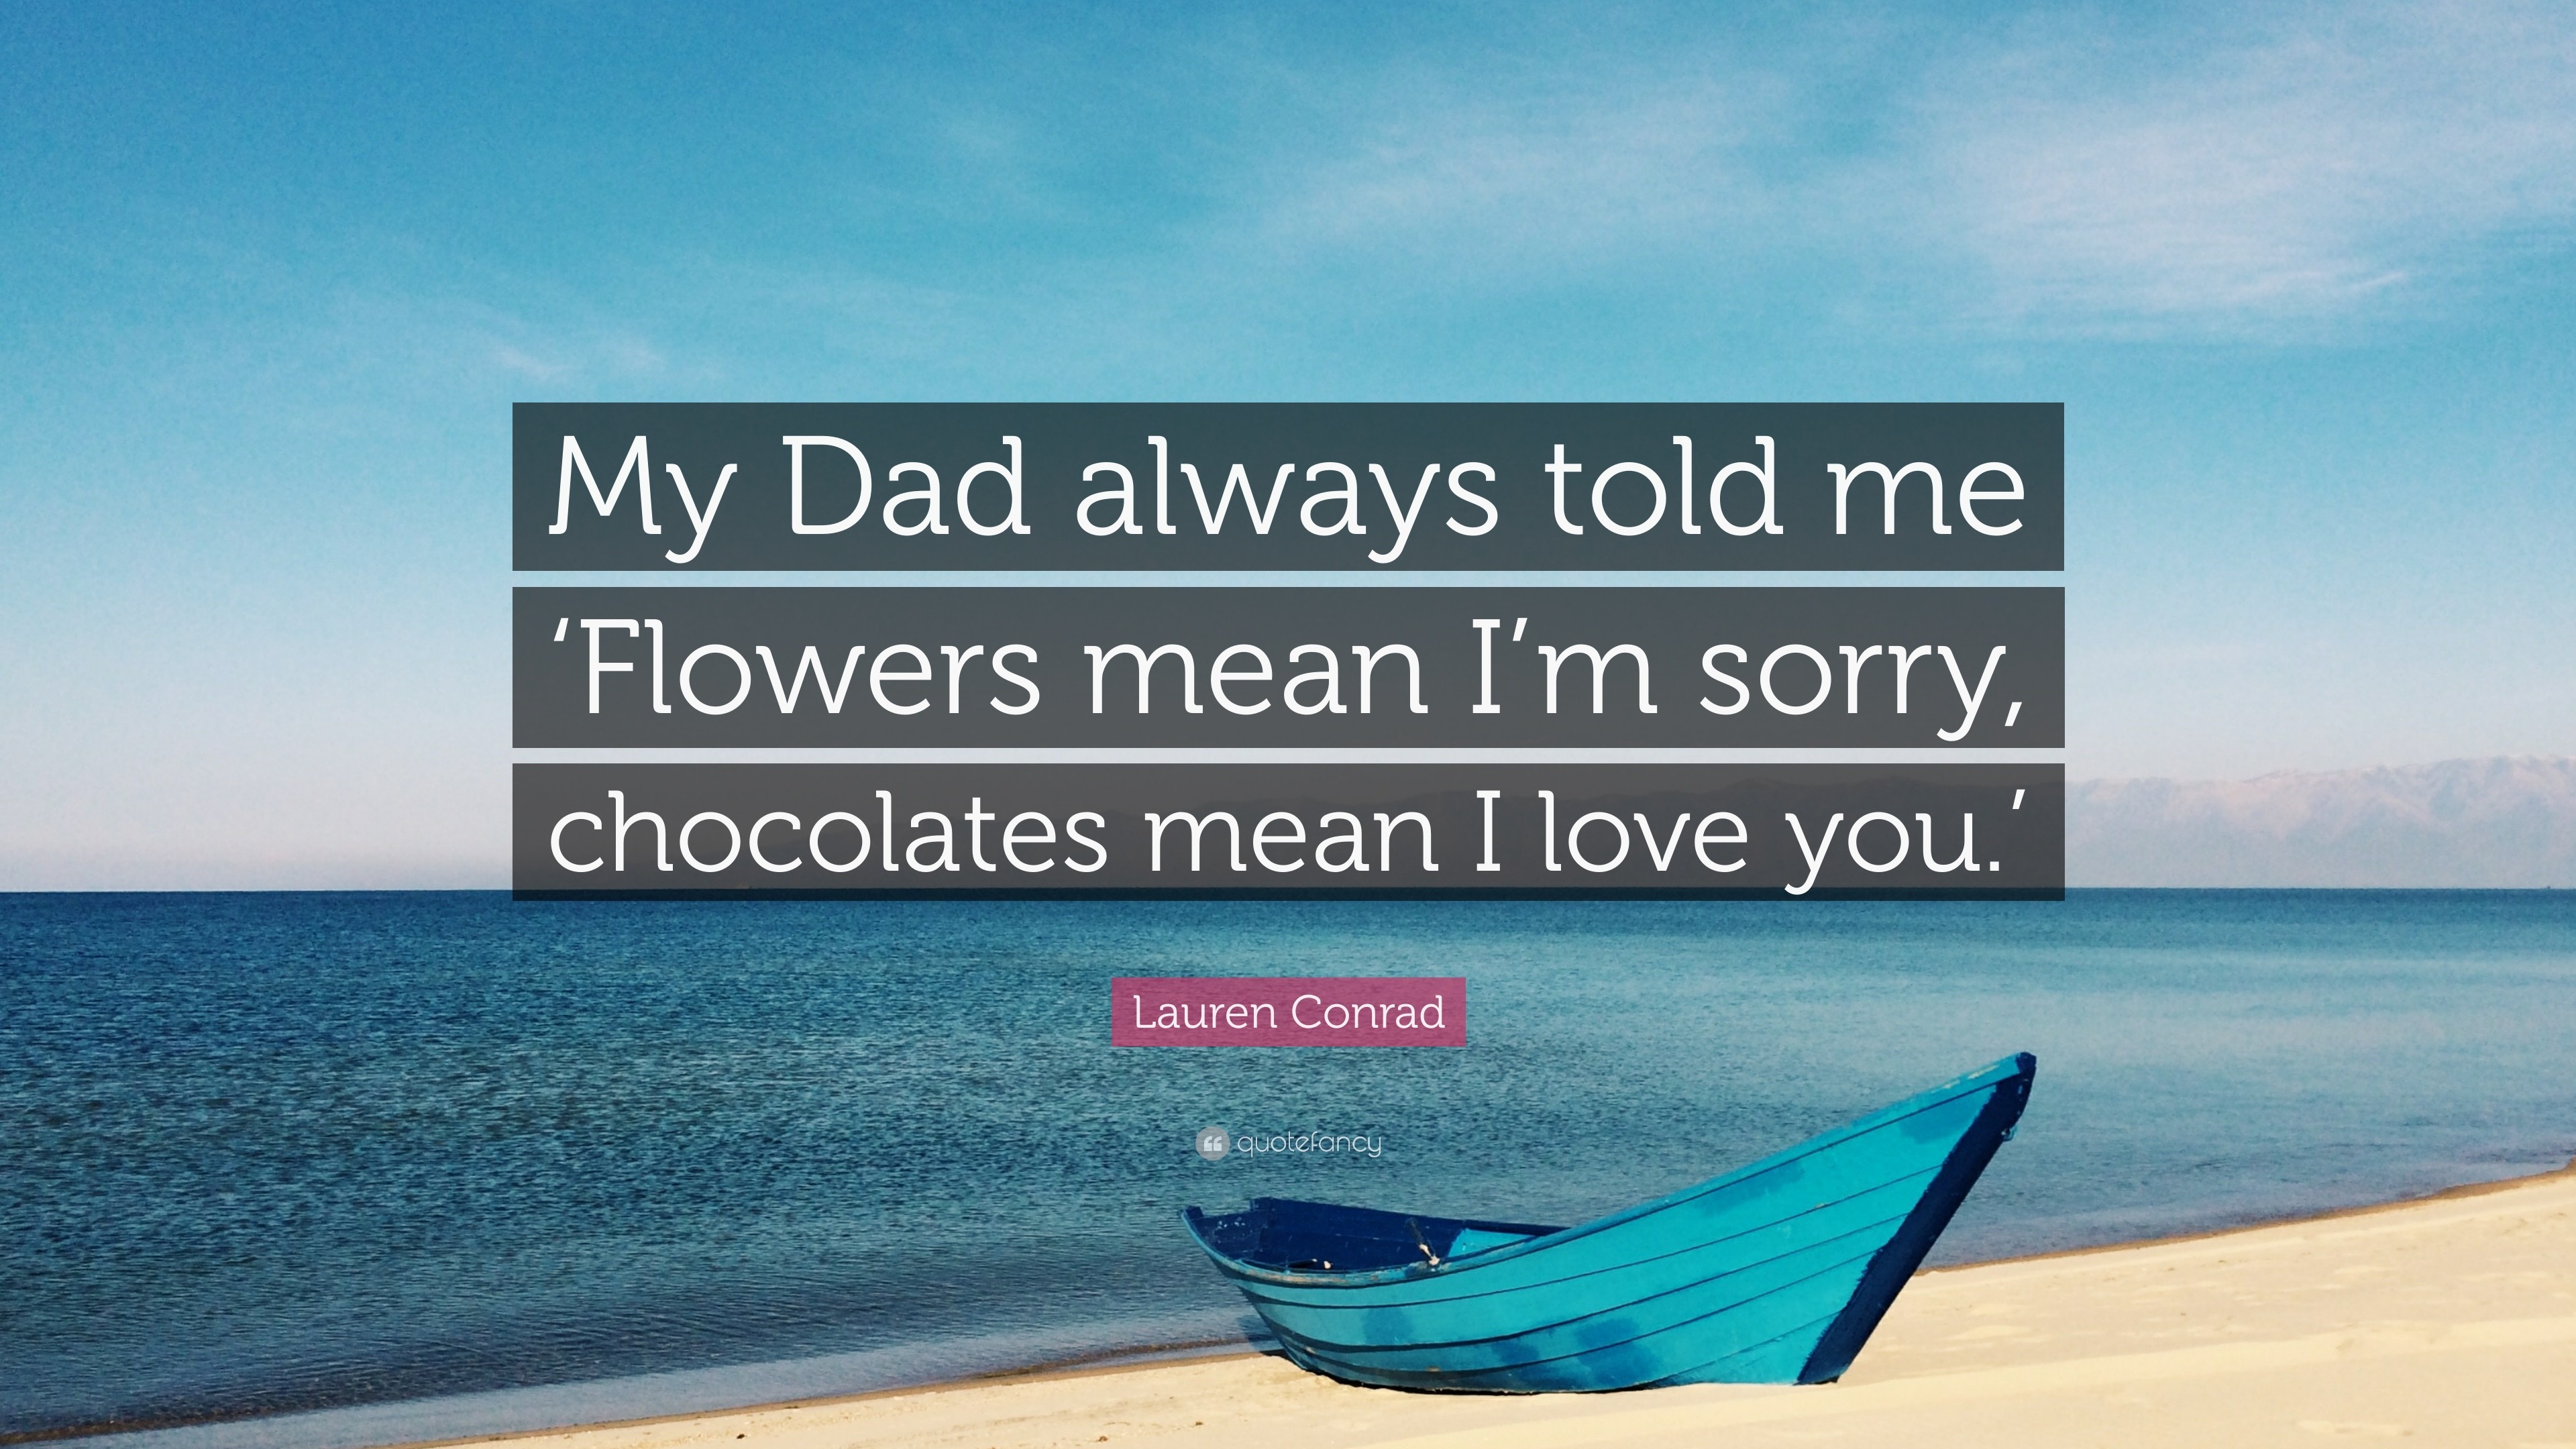 3840x2160 Lauren Conrad Quote: “My Dad always told me 'Flowers mean I'm